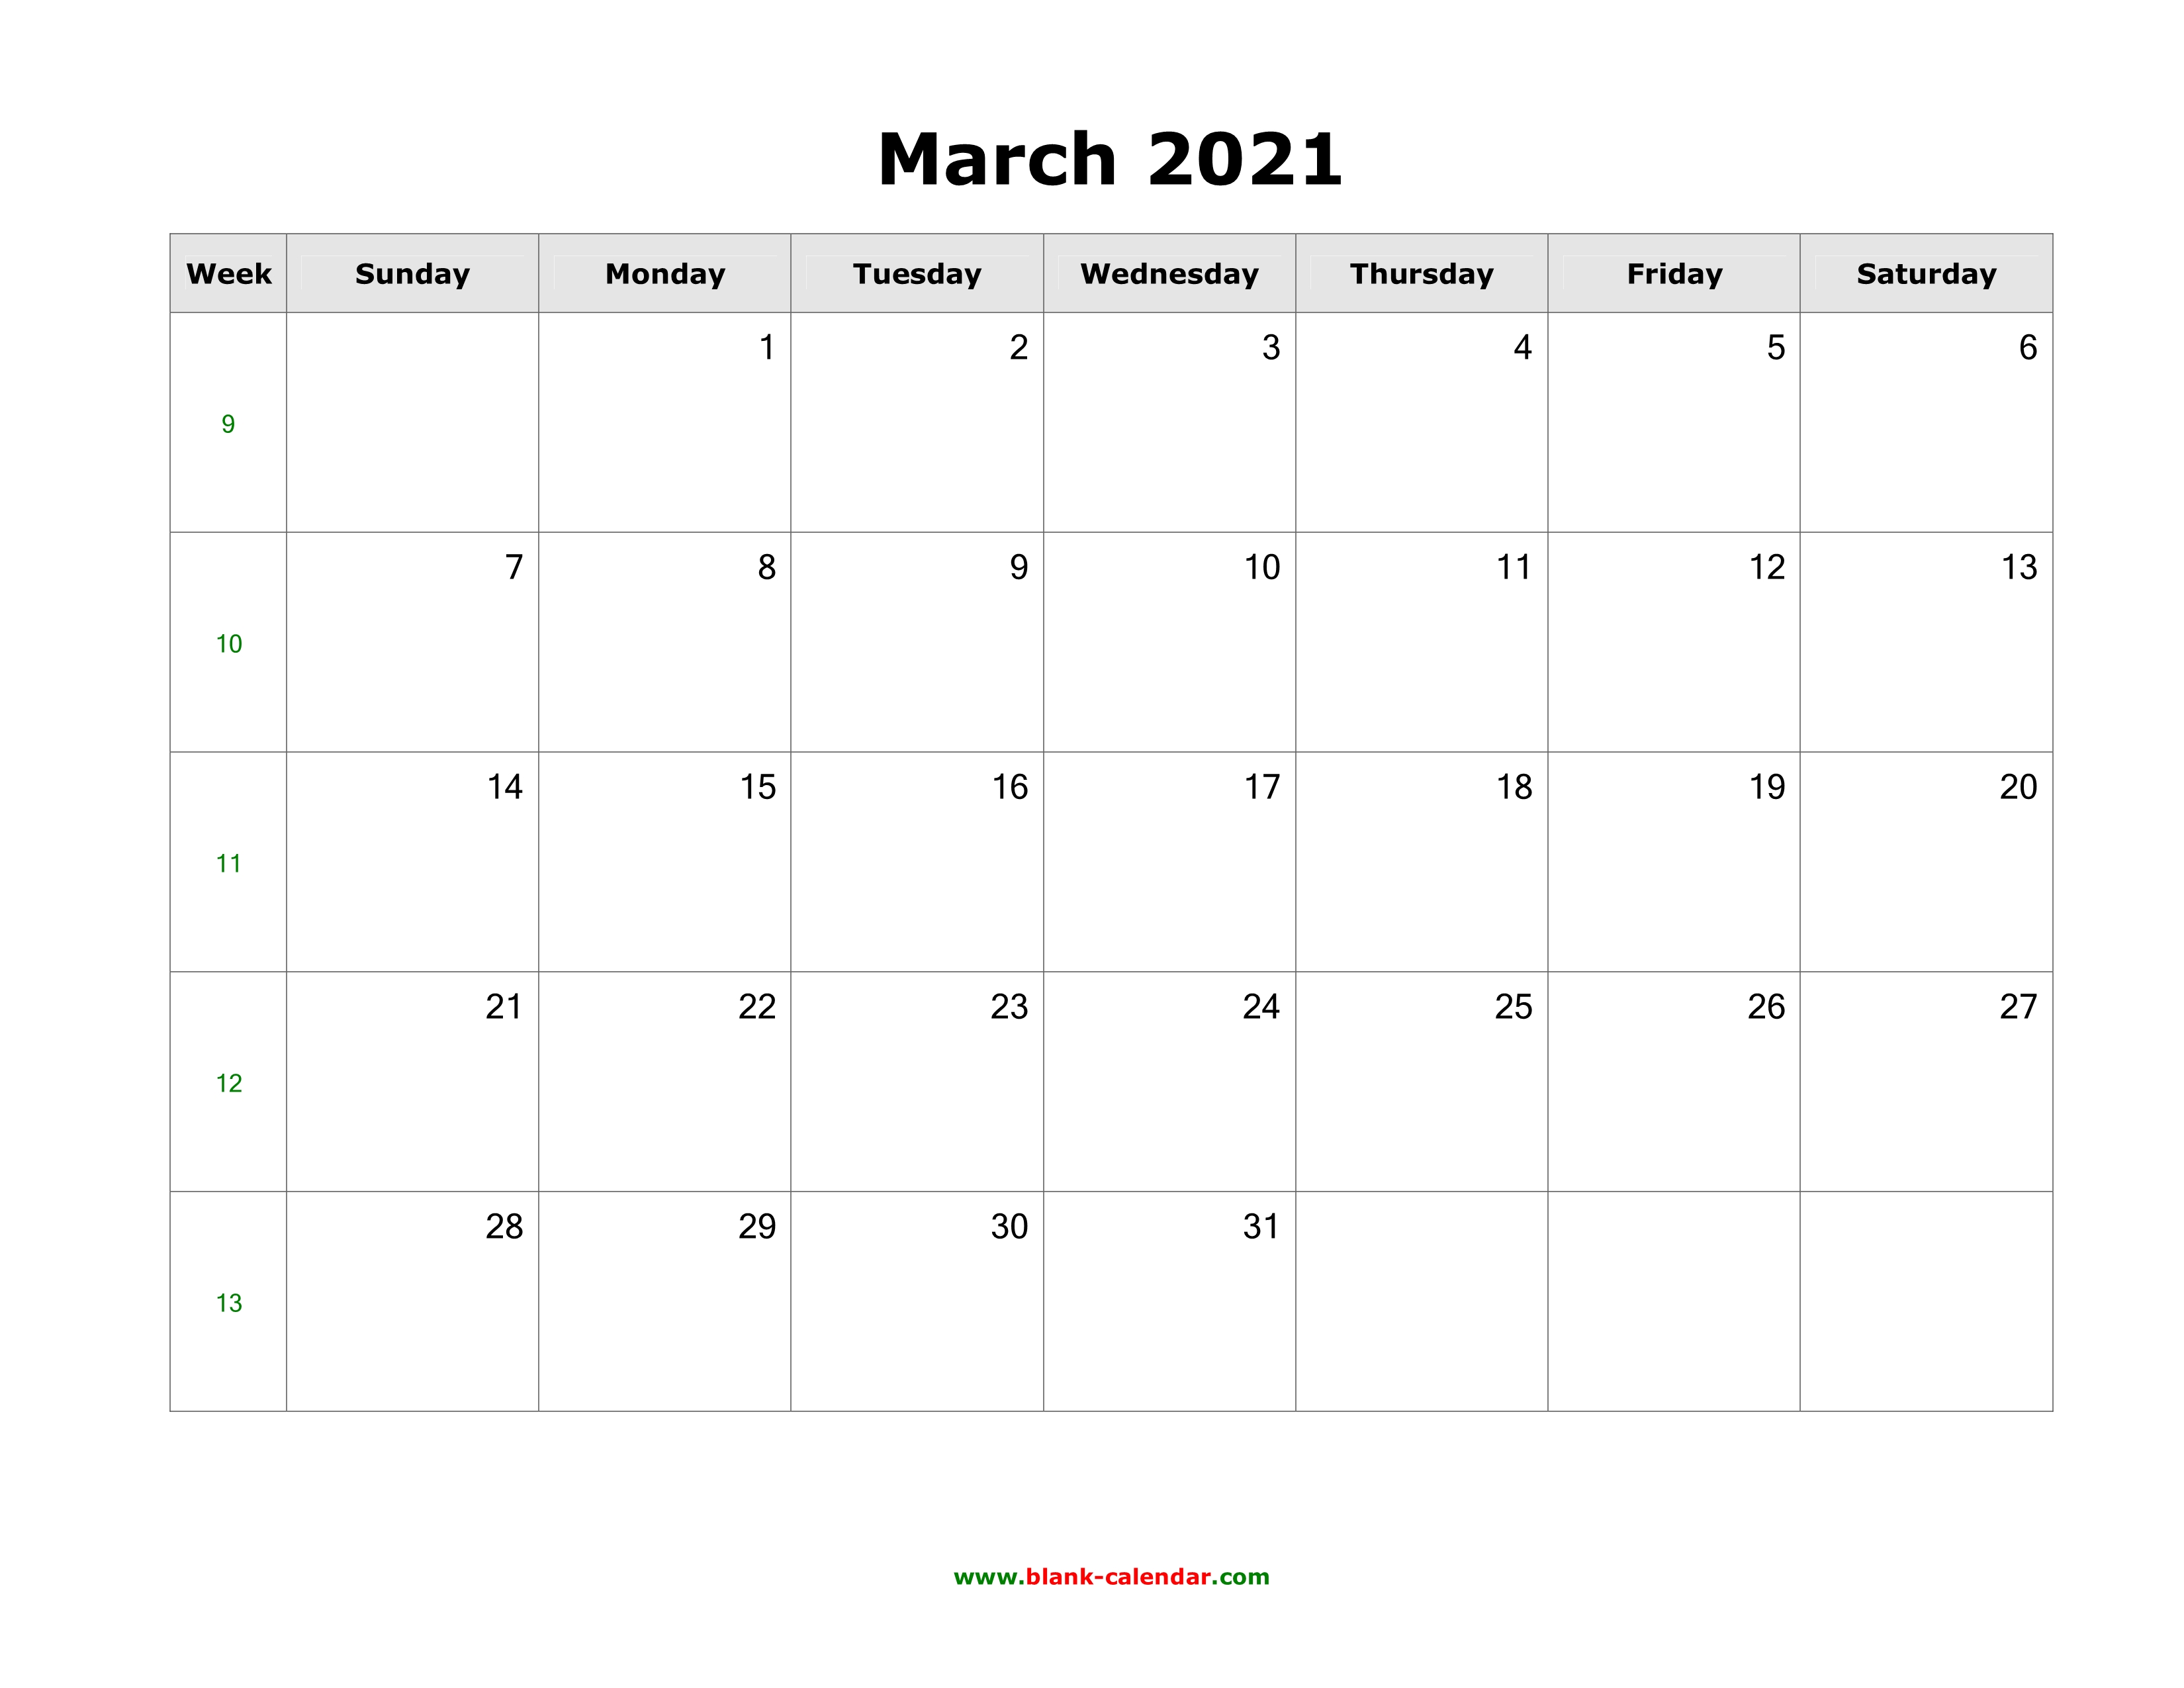 March 2021 Blank Calendar | Free Download Calendar Templates